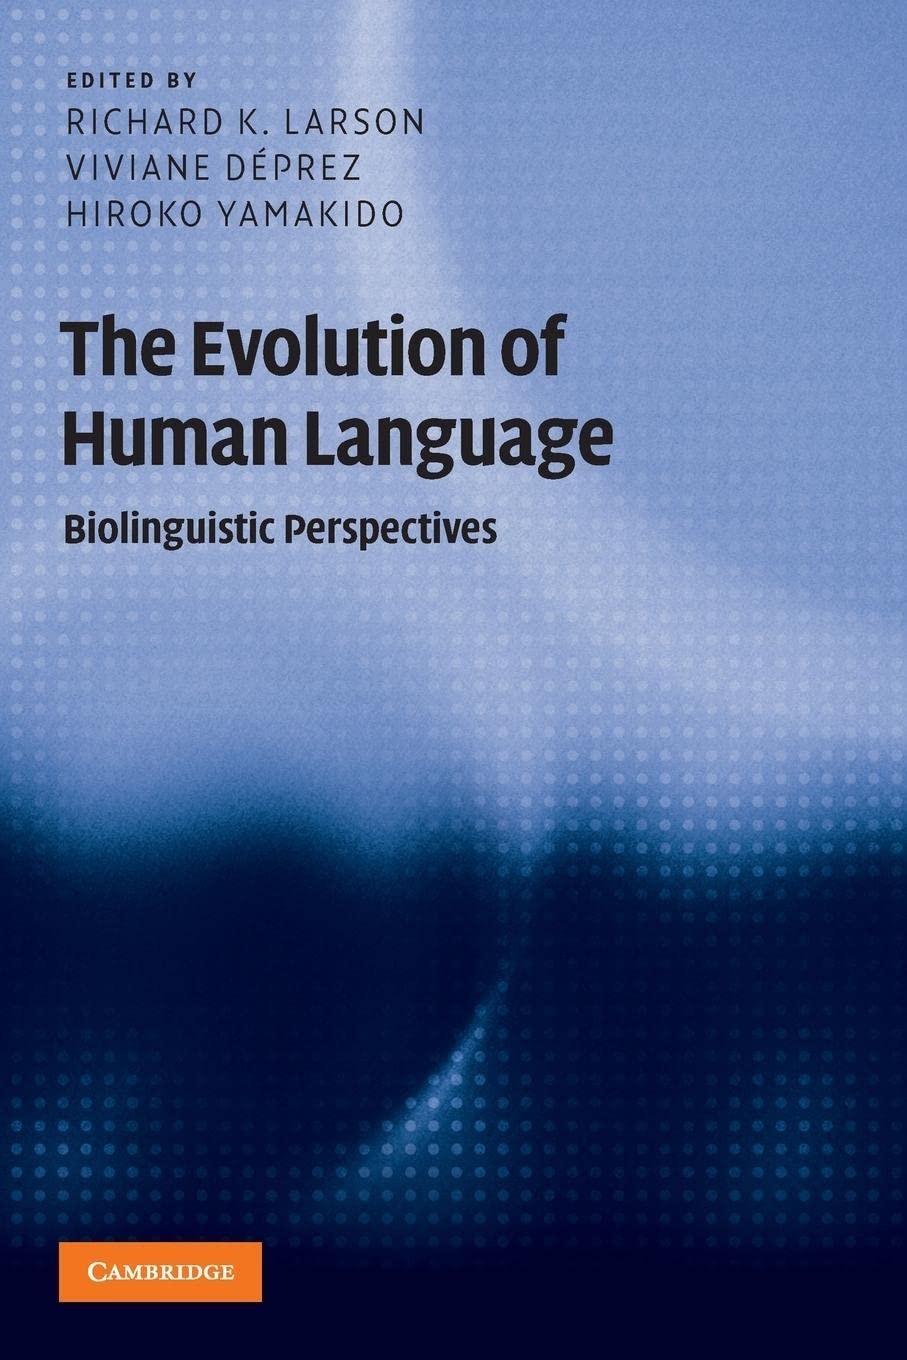 The Evolution of Human Language: Biolinguistic Perspectives